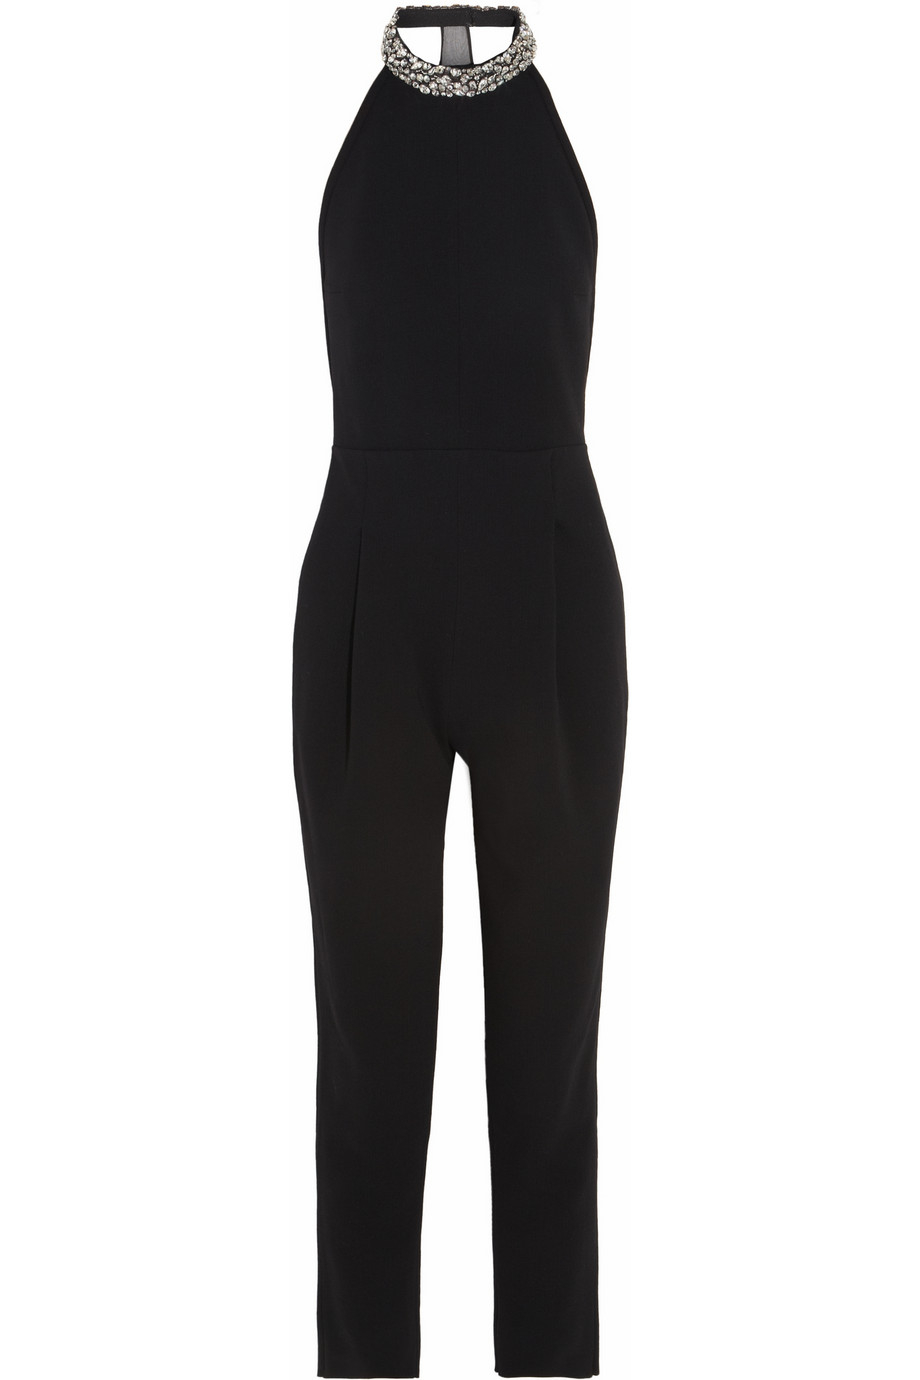 Emilio Pucci Crystal-embellished Woolblend Jumpsuit in Black | Lyst